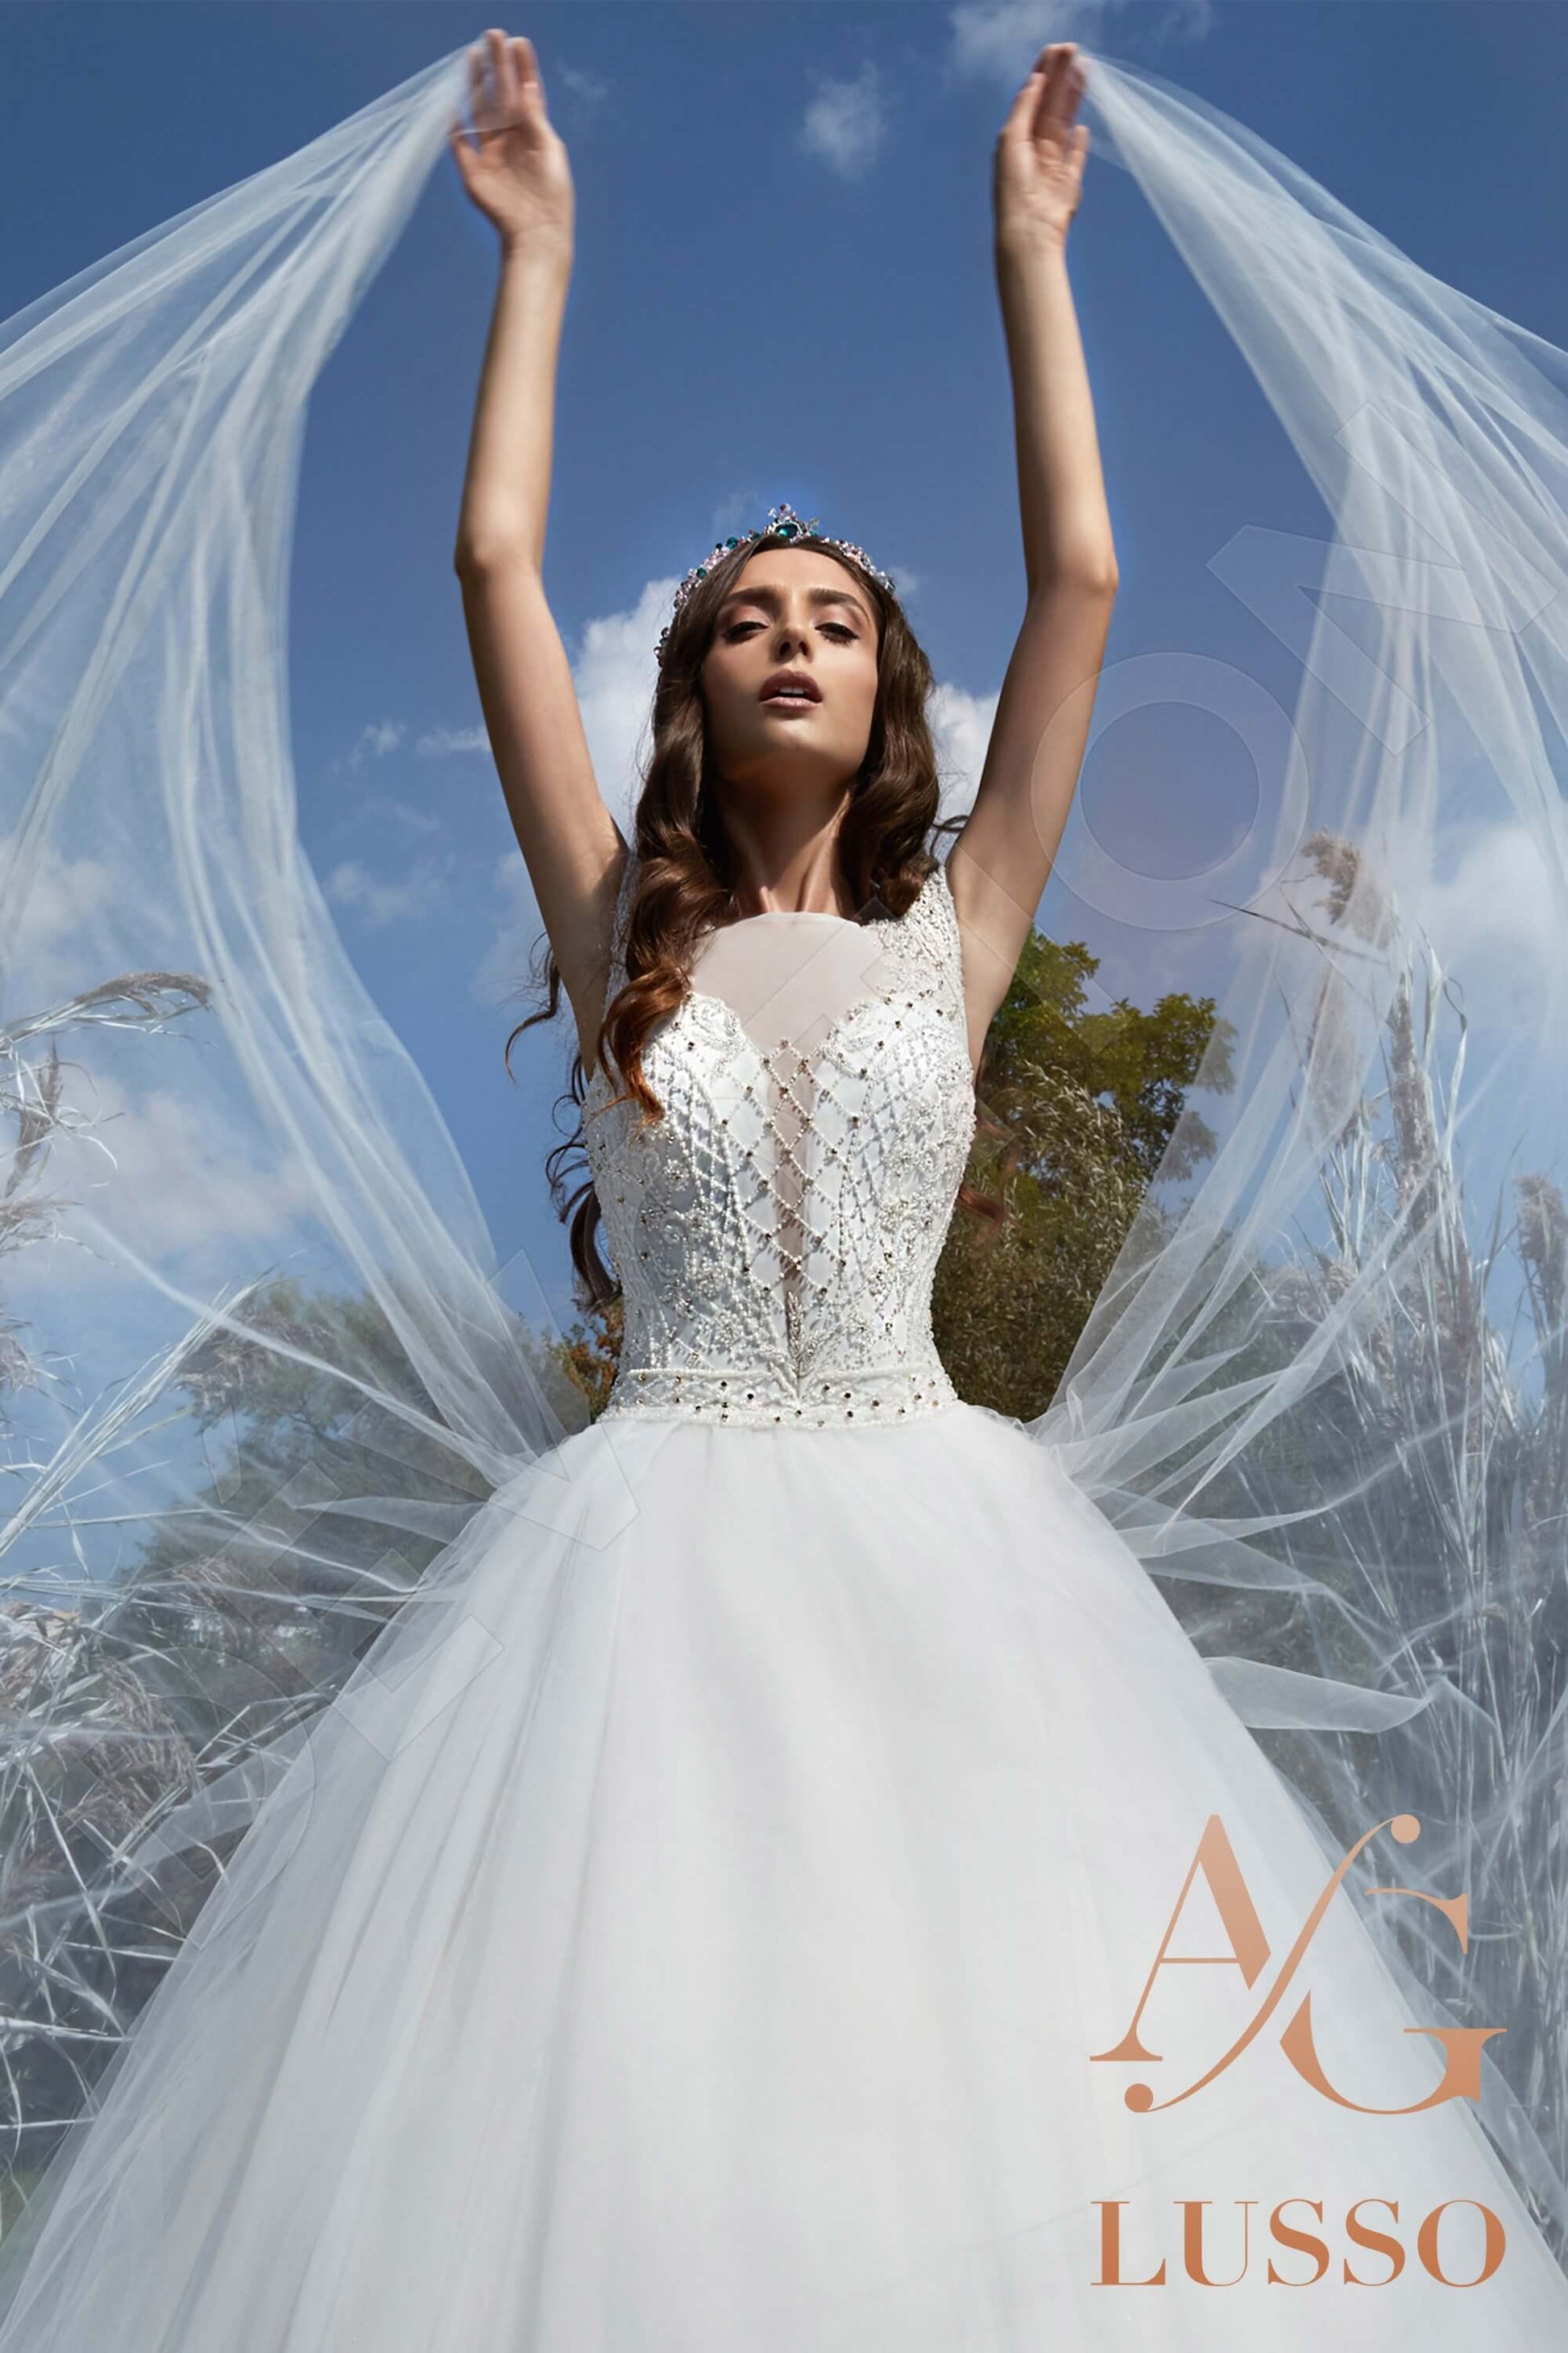 Sagel Princess/Ball Gown Boat/Bateau White Wedding dress